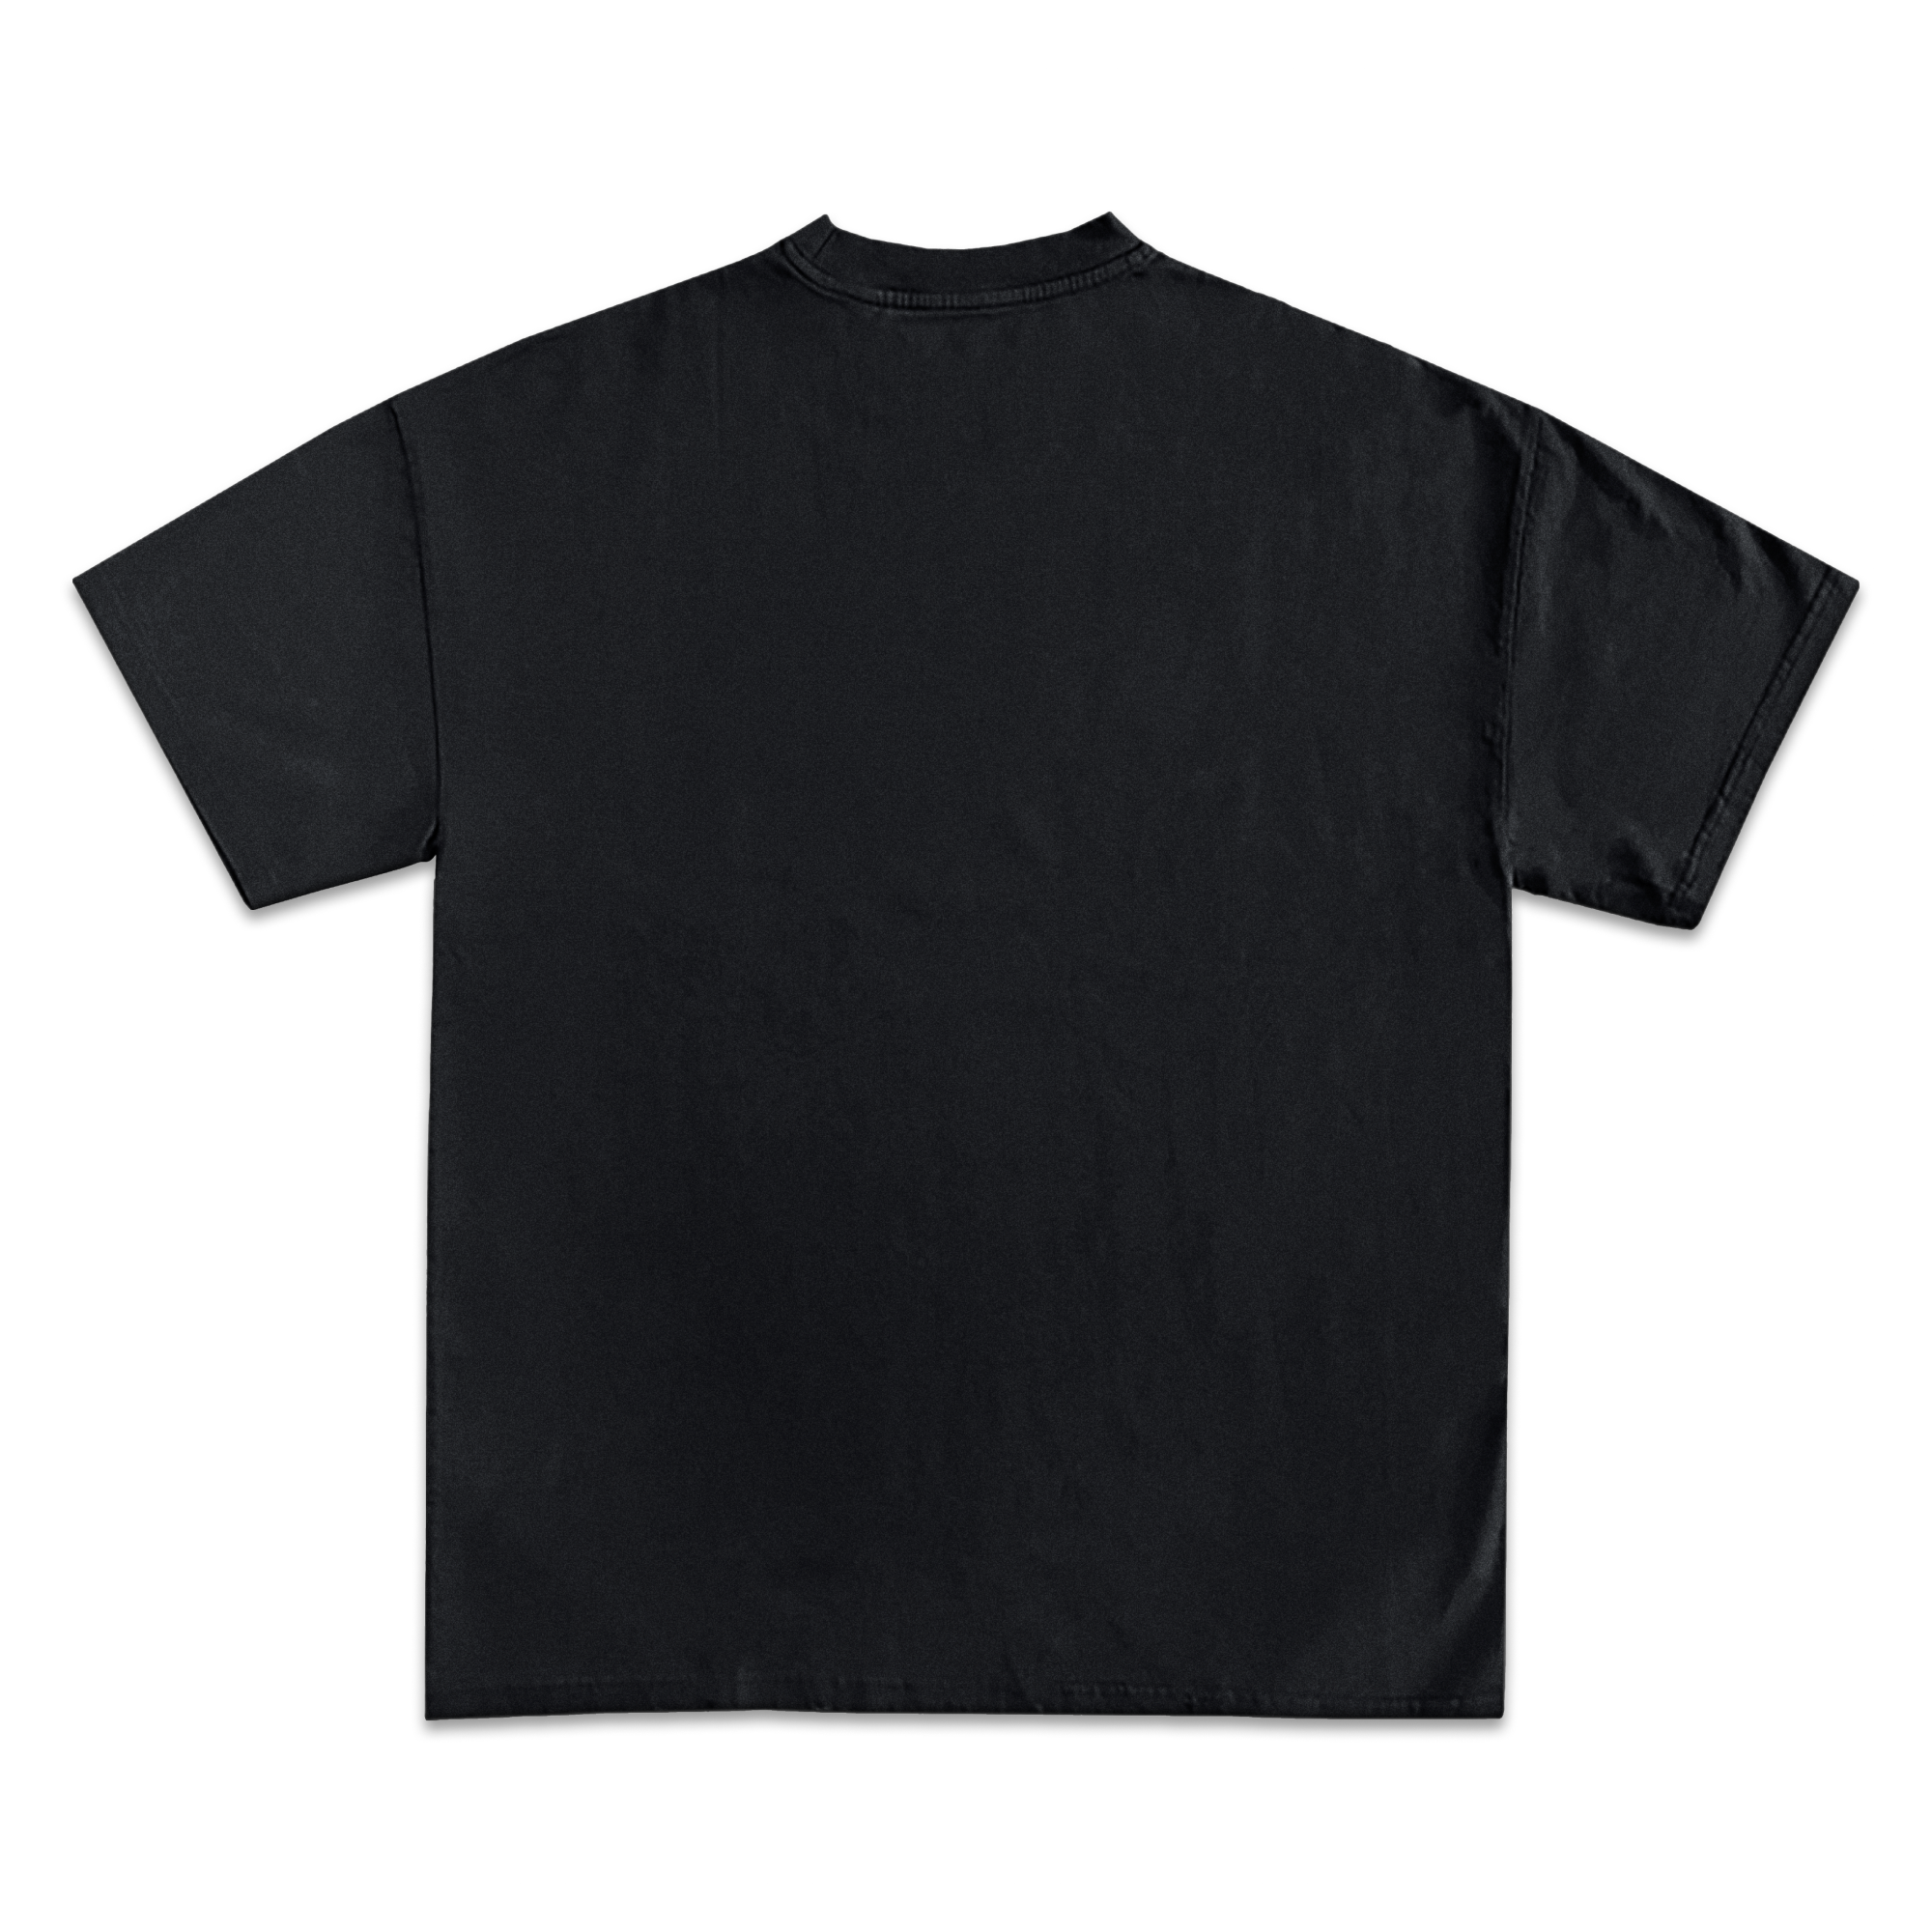 Death Row Graphic T-Shirt